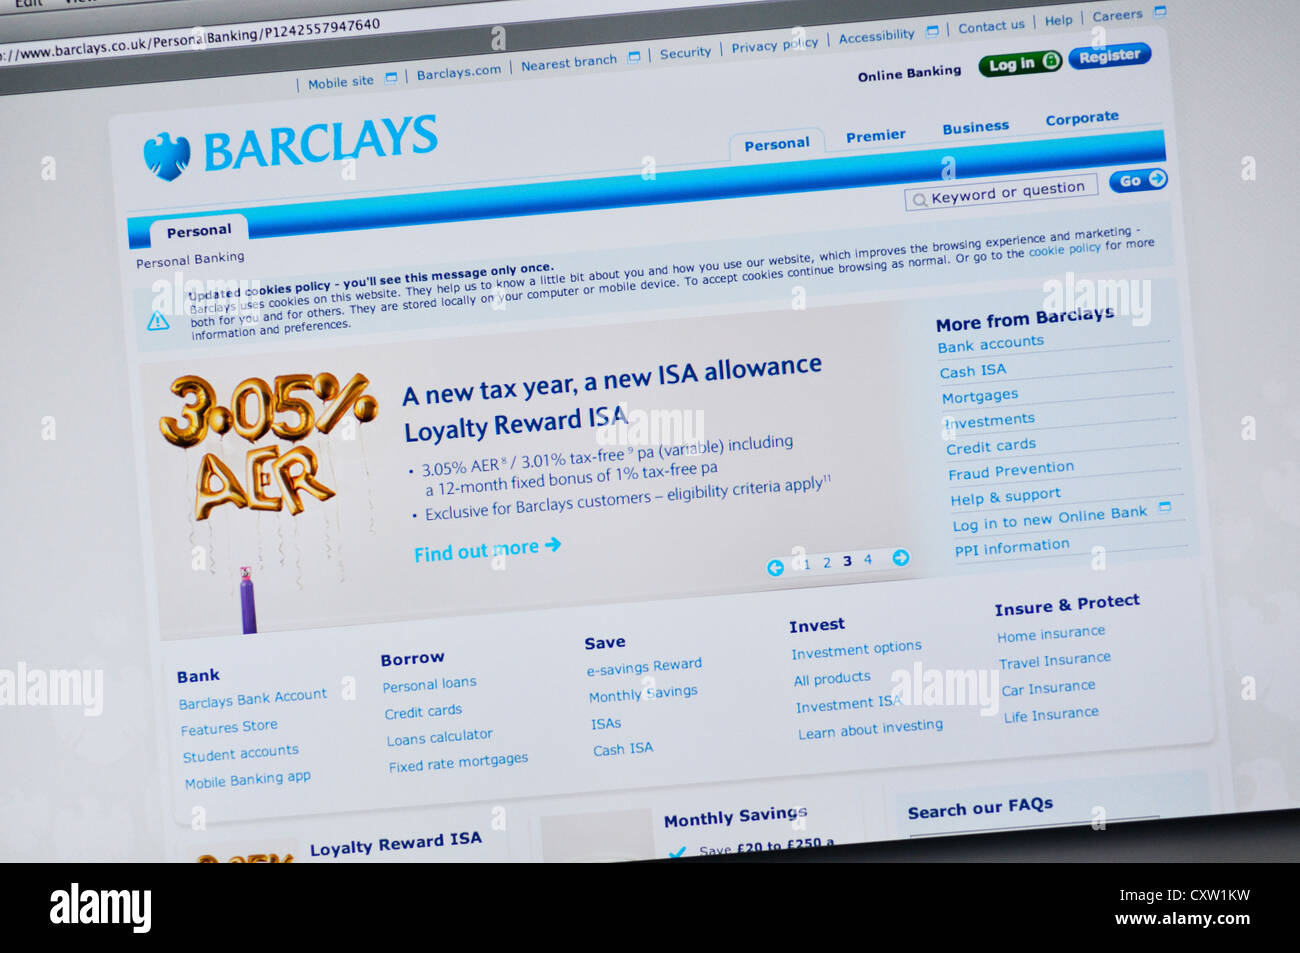 Barclays Website Online Banking Stockfotografie Alamy